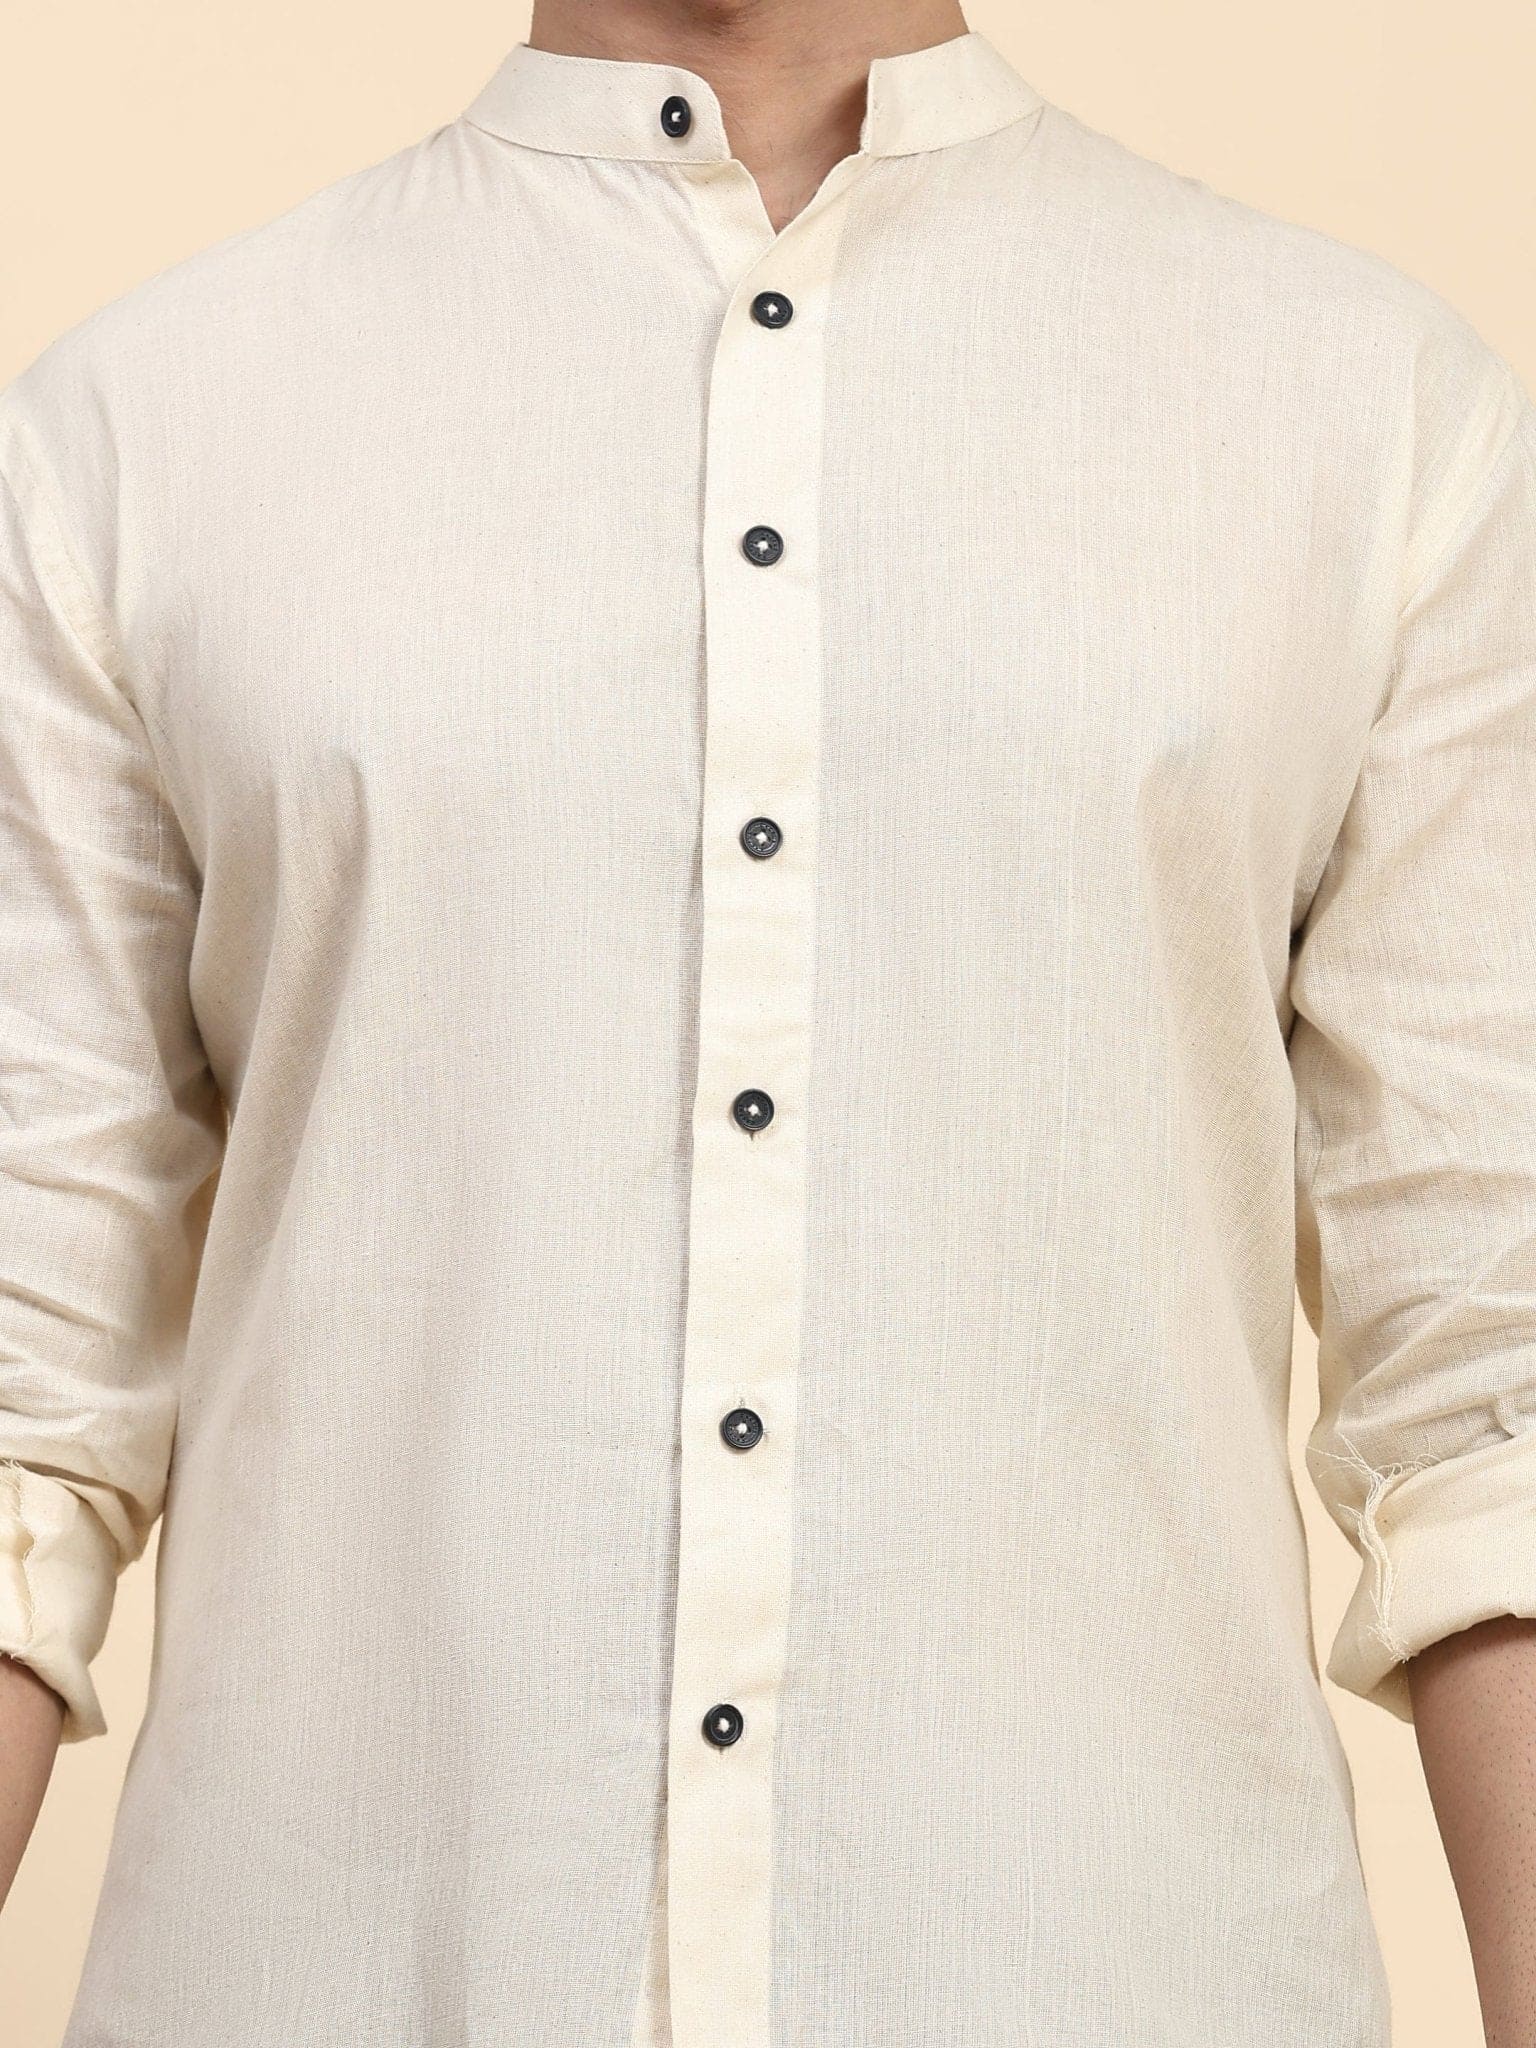 Off-White Cotton Men Shirt - Charkha TalesOff-White Cotton Men Shirt